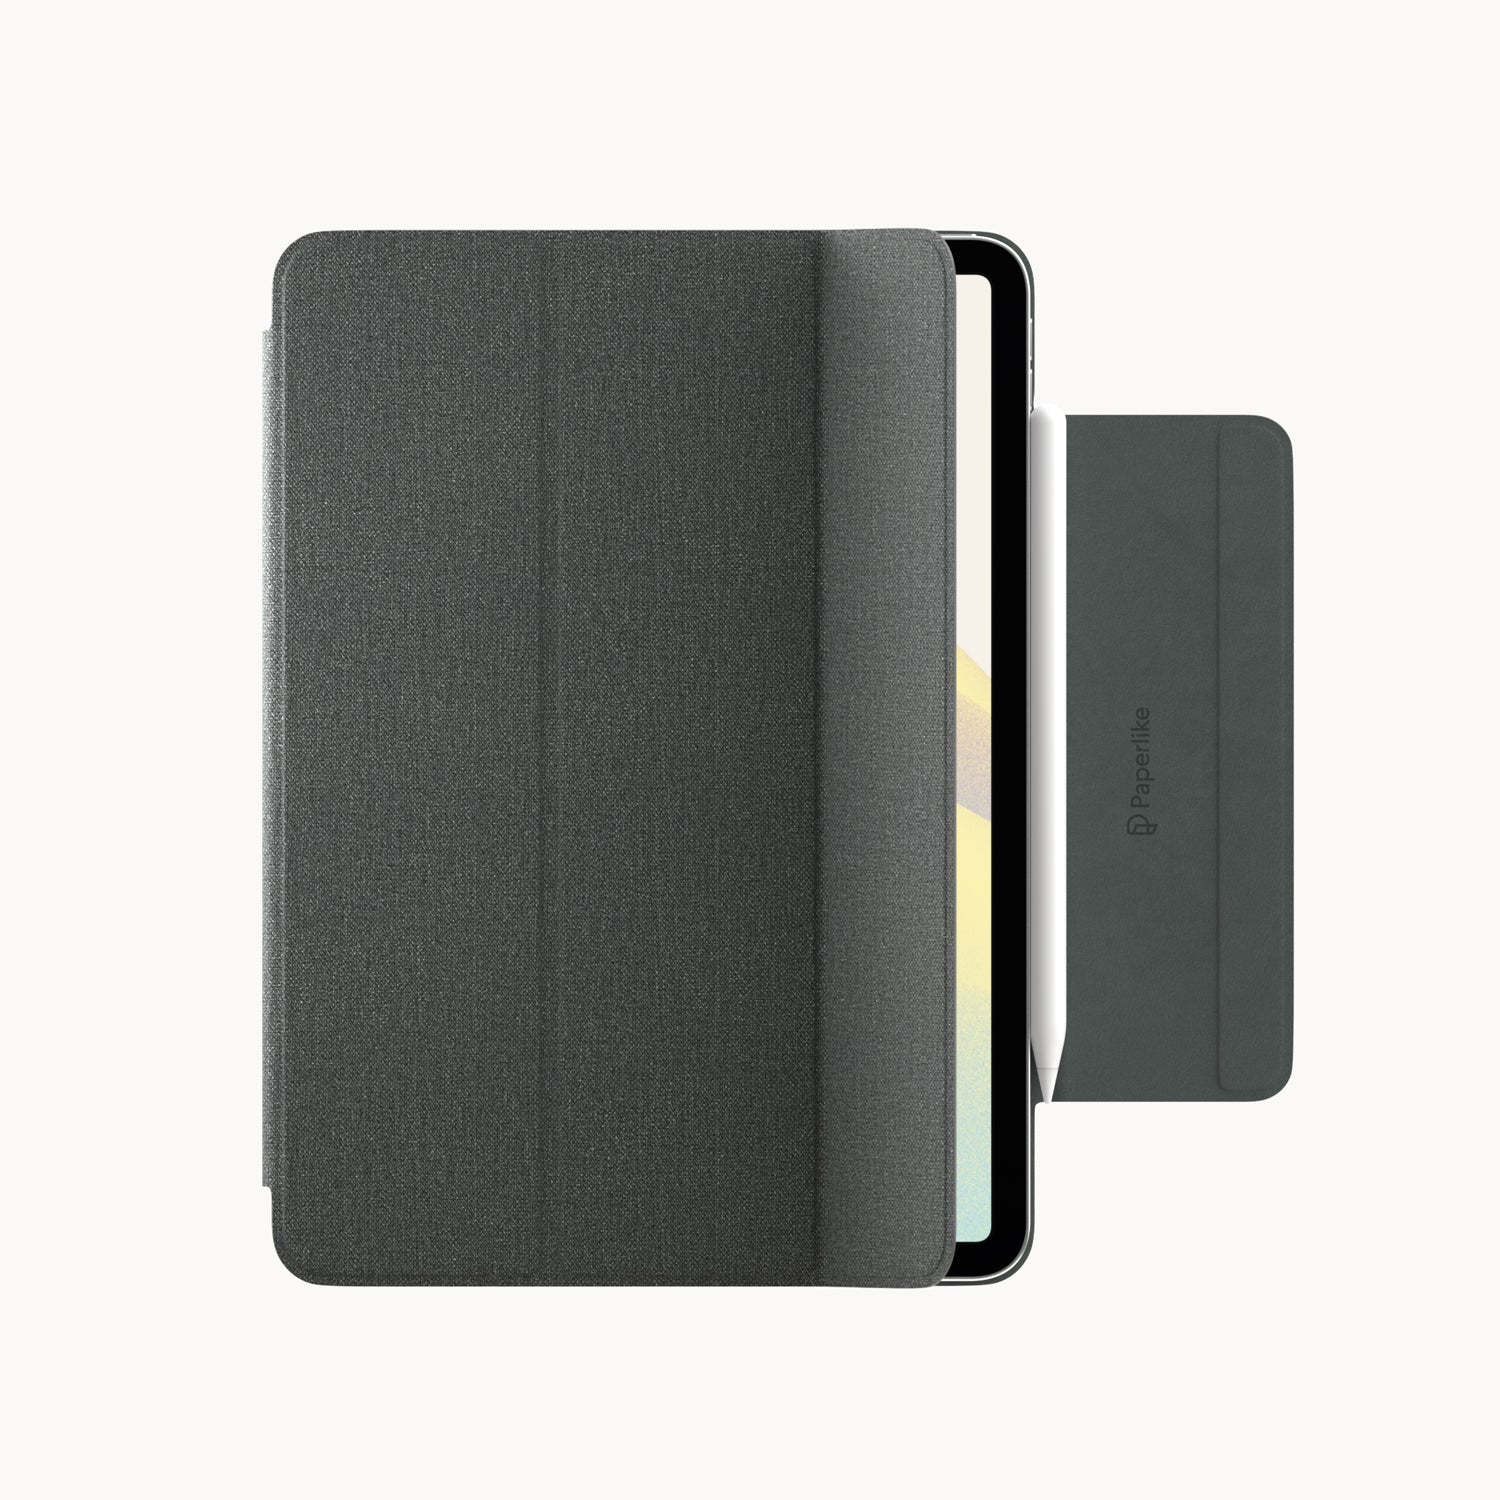 iPad photo with Folio case and Apple Pencil